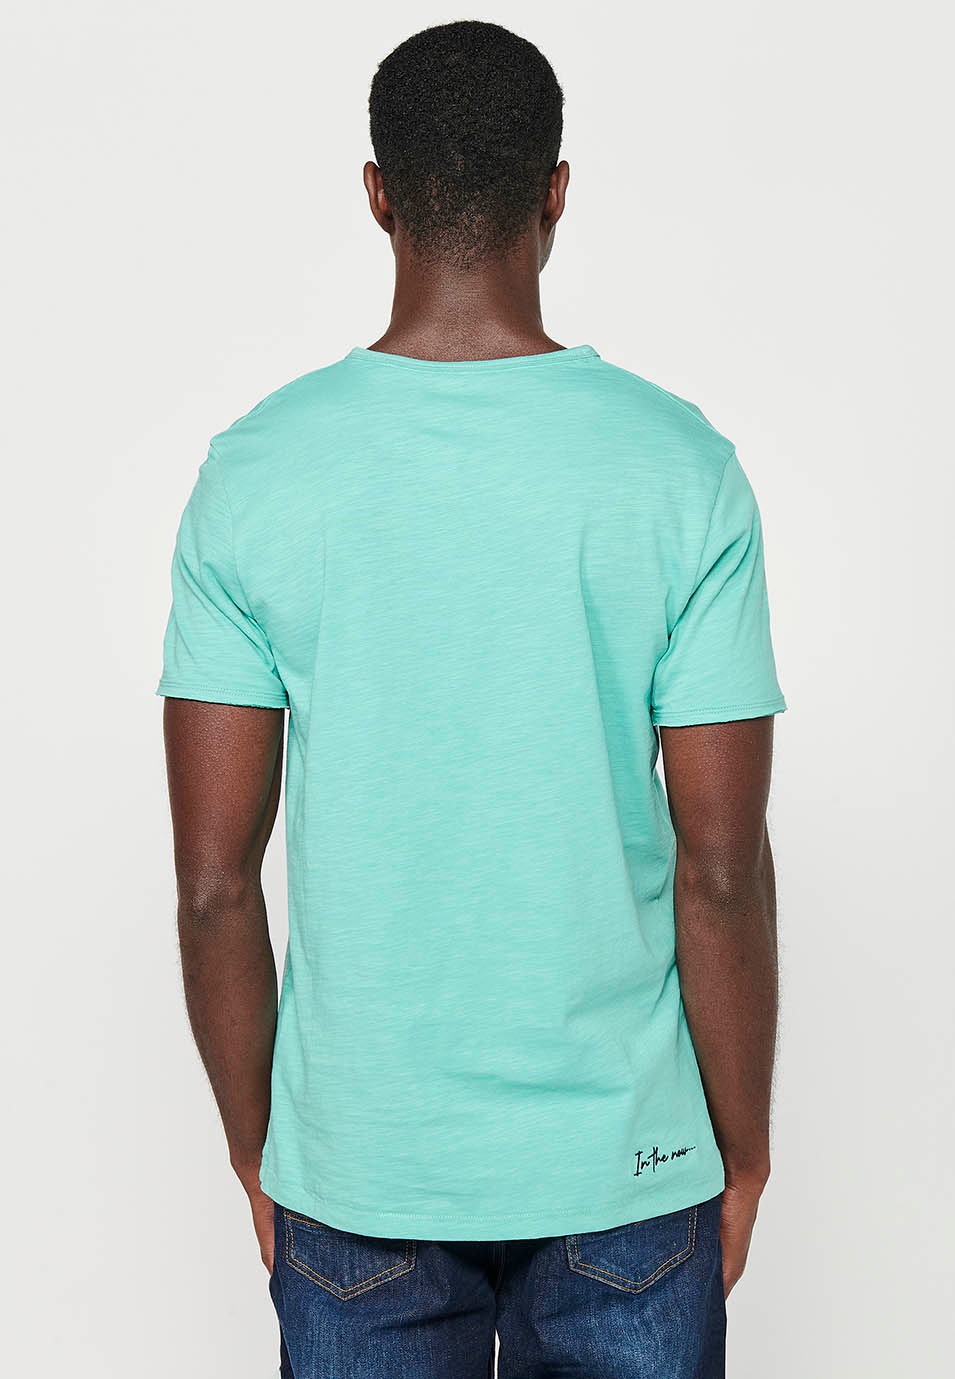 Basic short-sleeved cotton t-shirt, V-neck with button, mint color for men 2